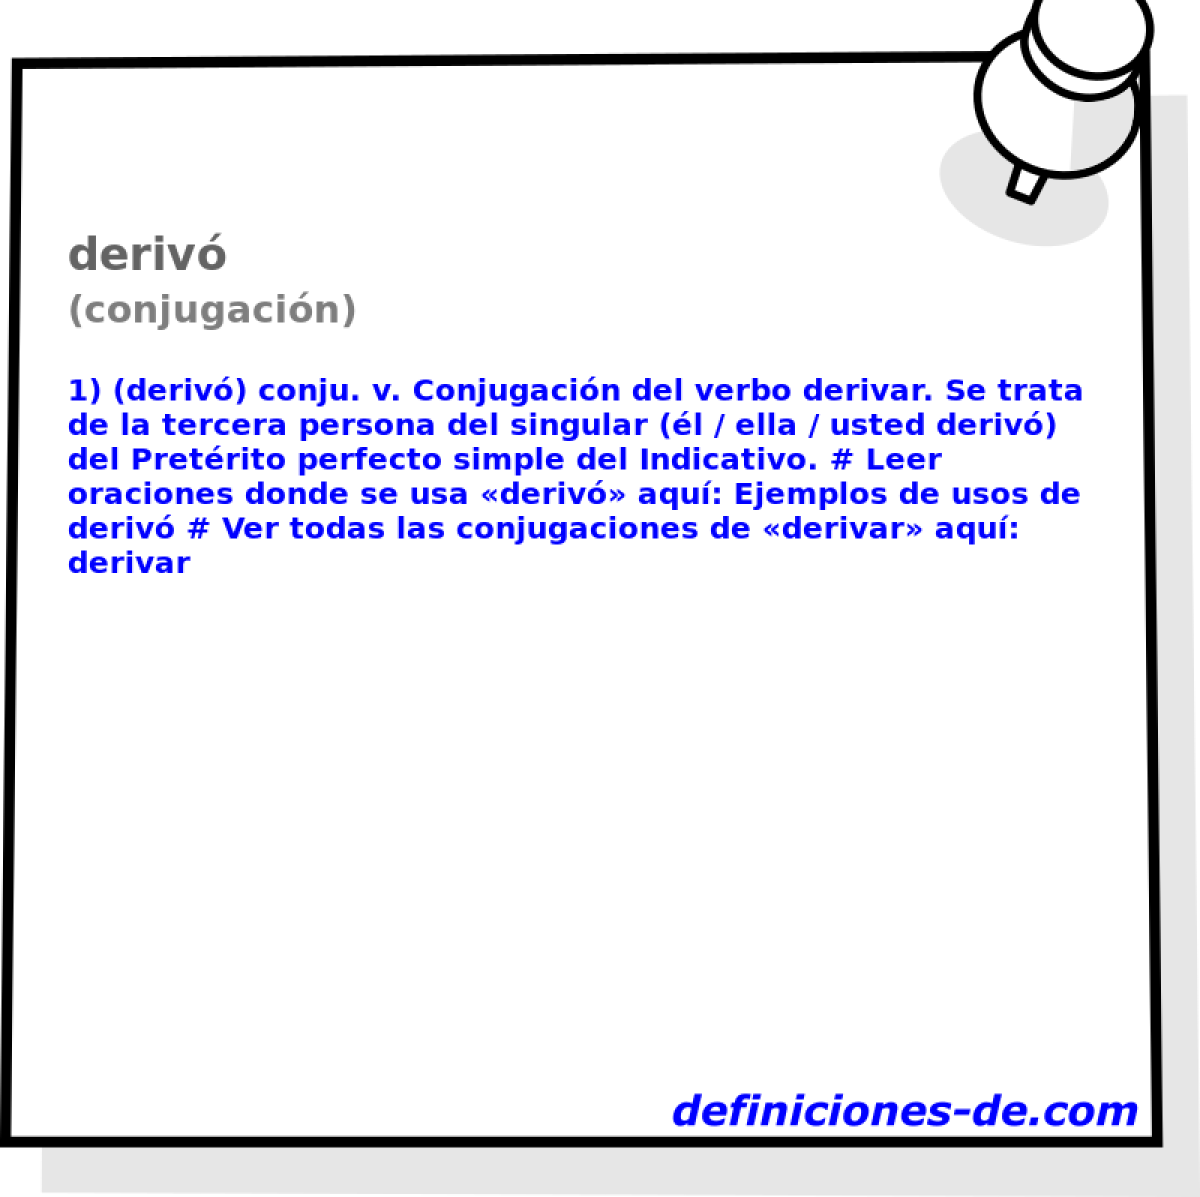 deriv (conjugacin)